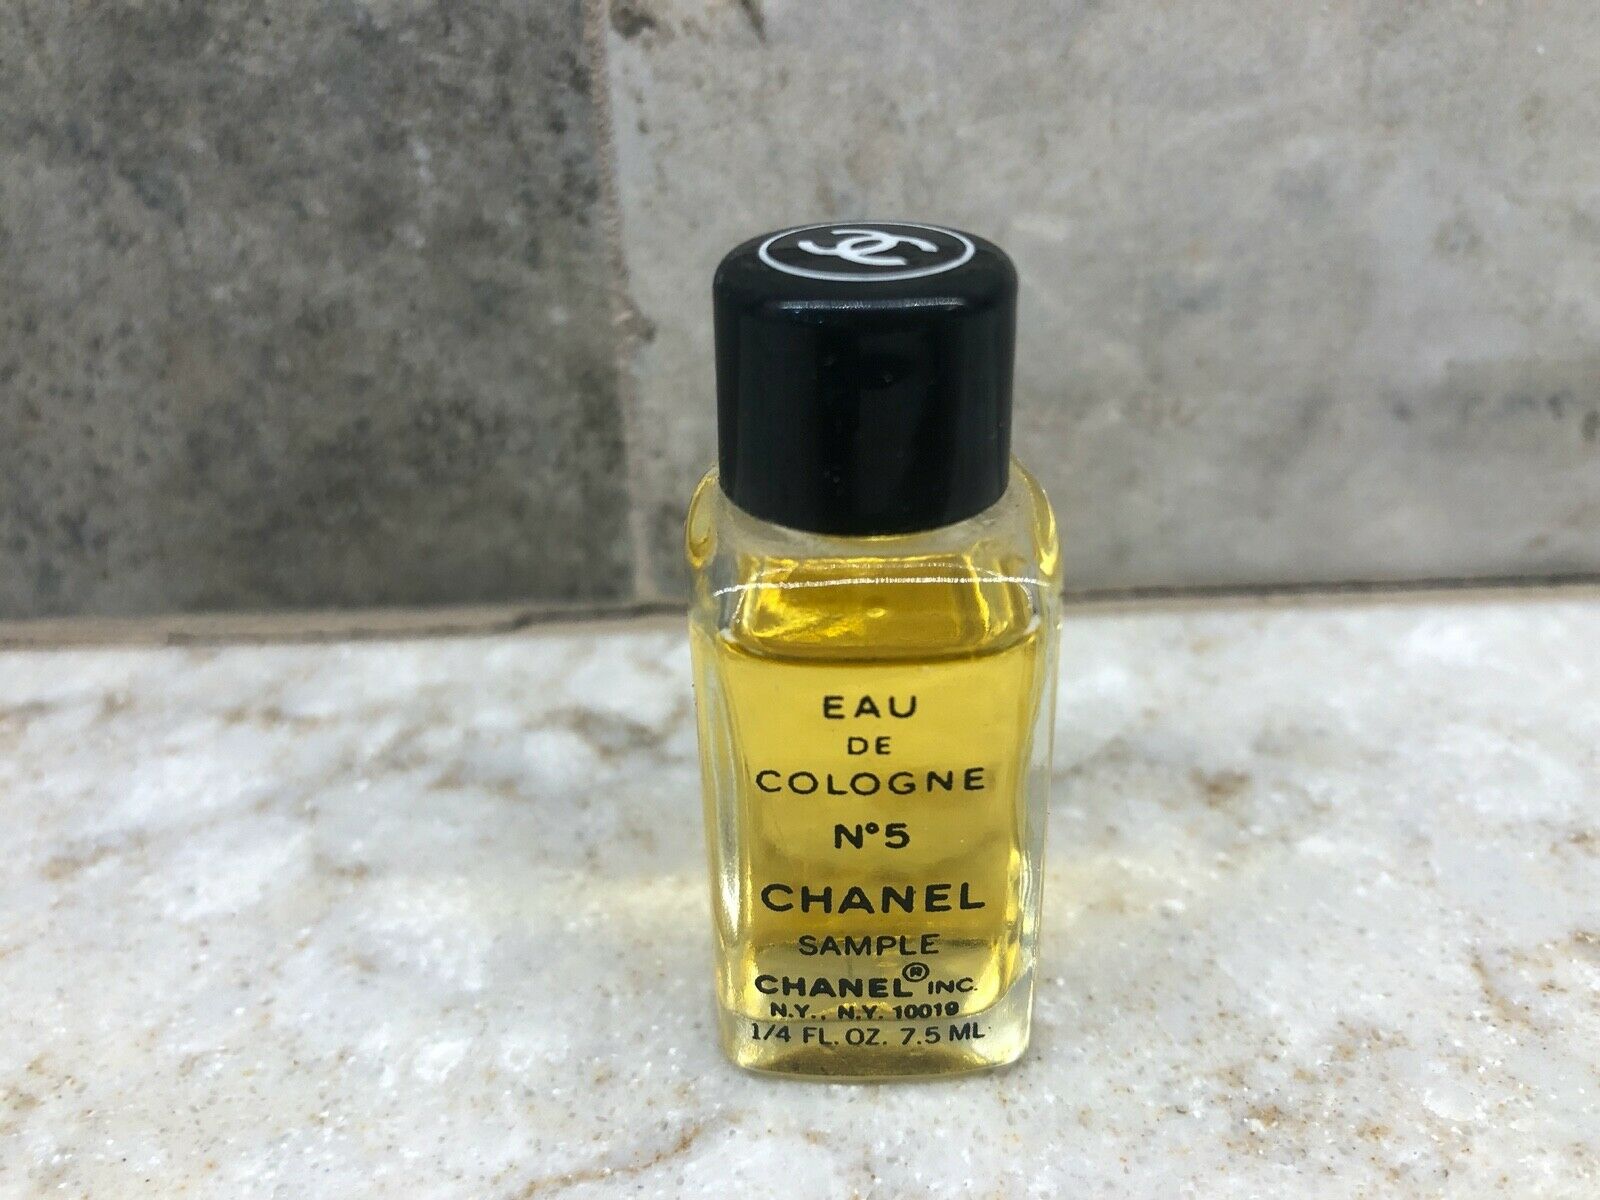 Chanel Eau De Cologne N5 Miniature Perfume Bottle